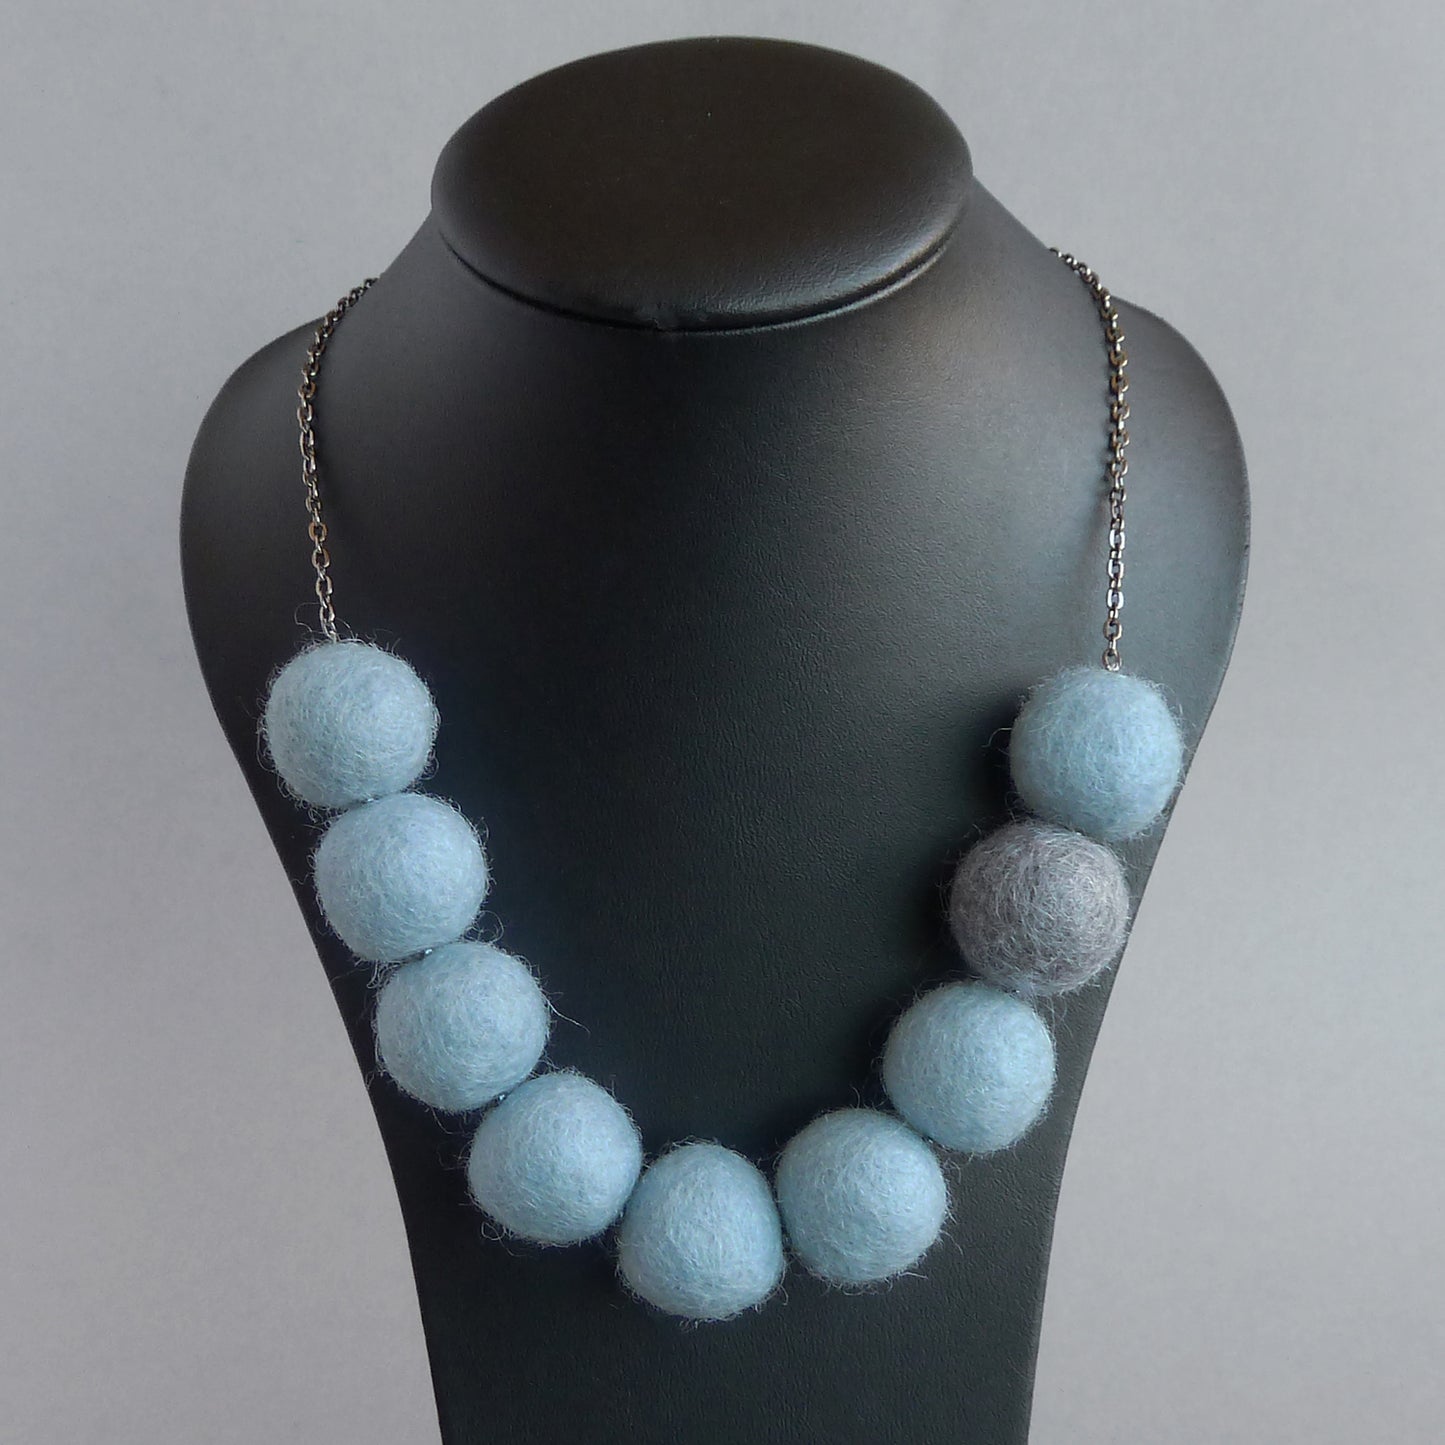 Dusty blue felt ball necklace